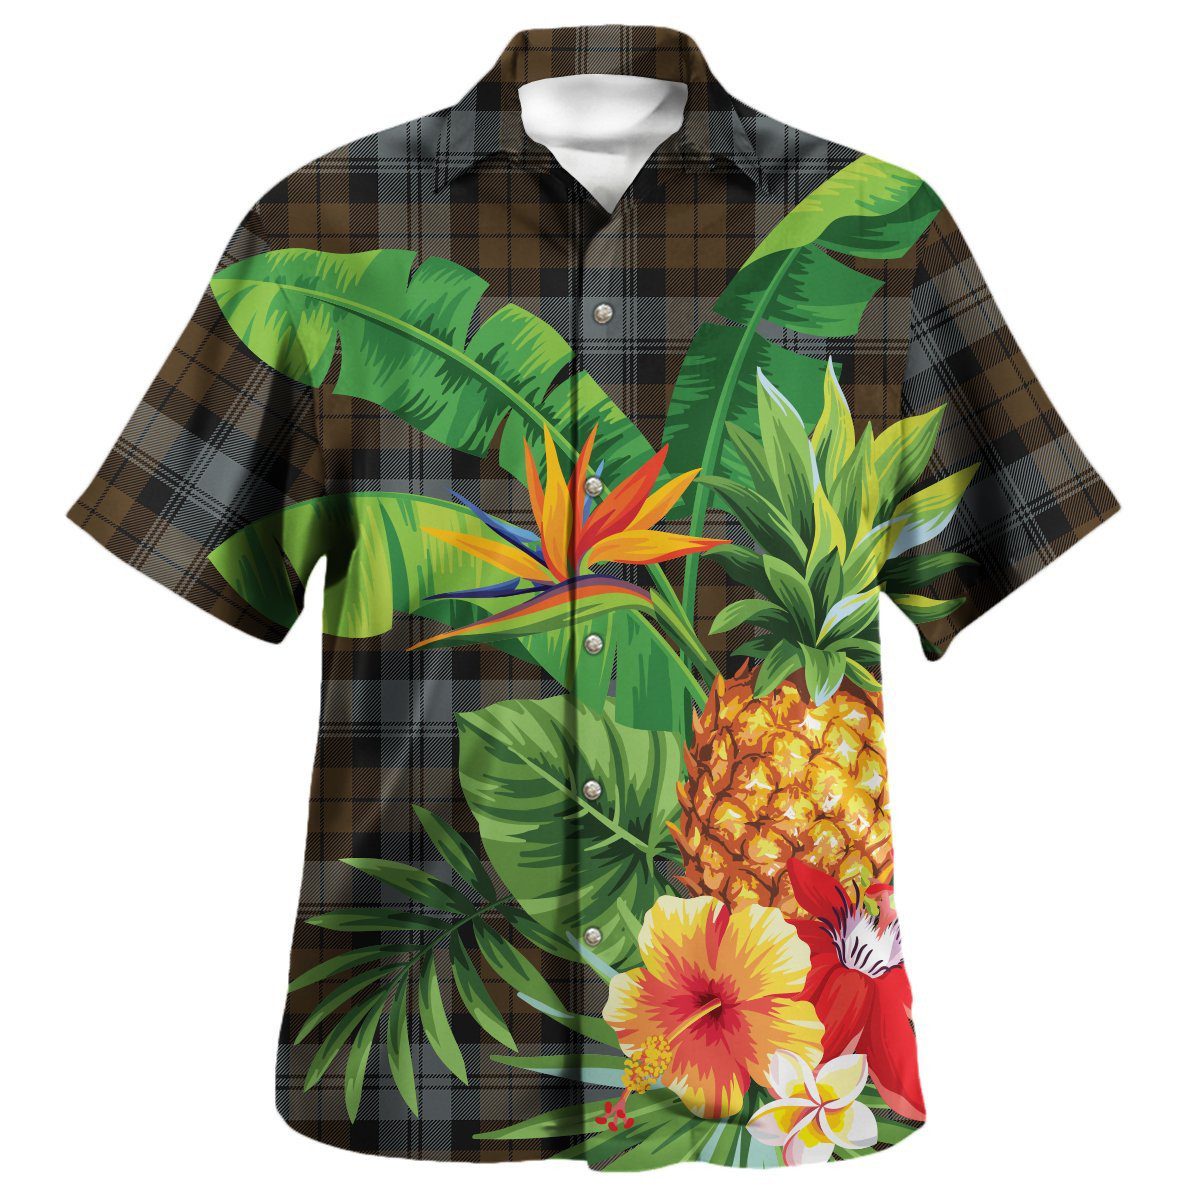 BlackWatch Weathered Tartan Aloha Shirt version 2